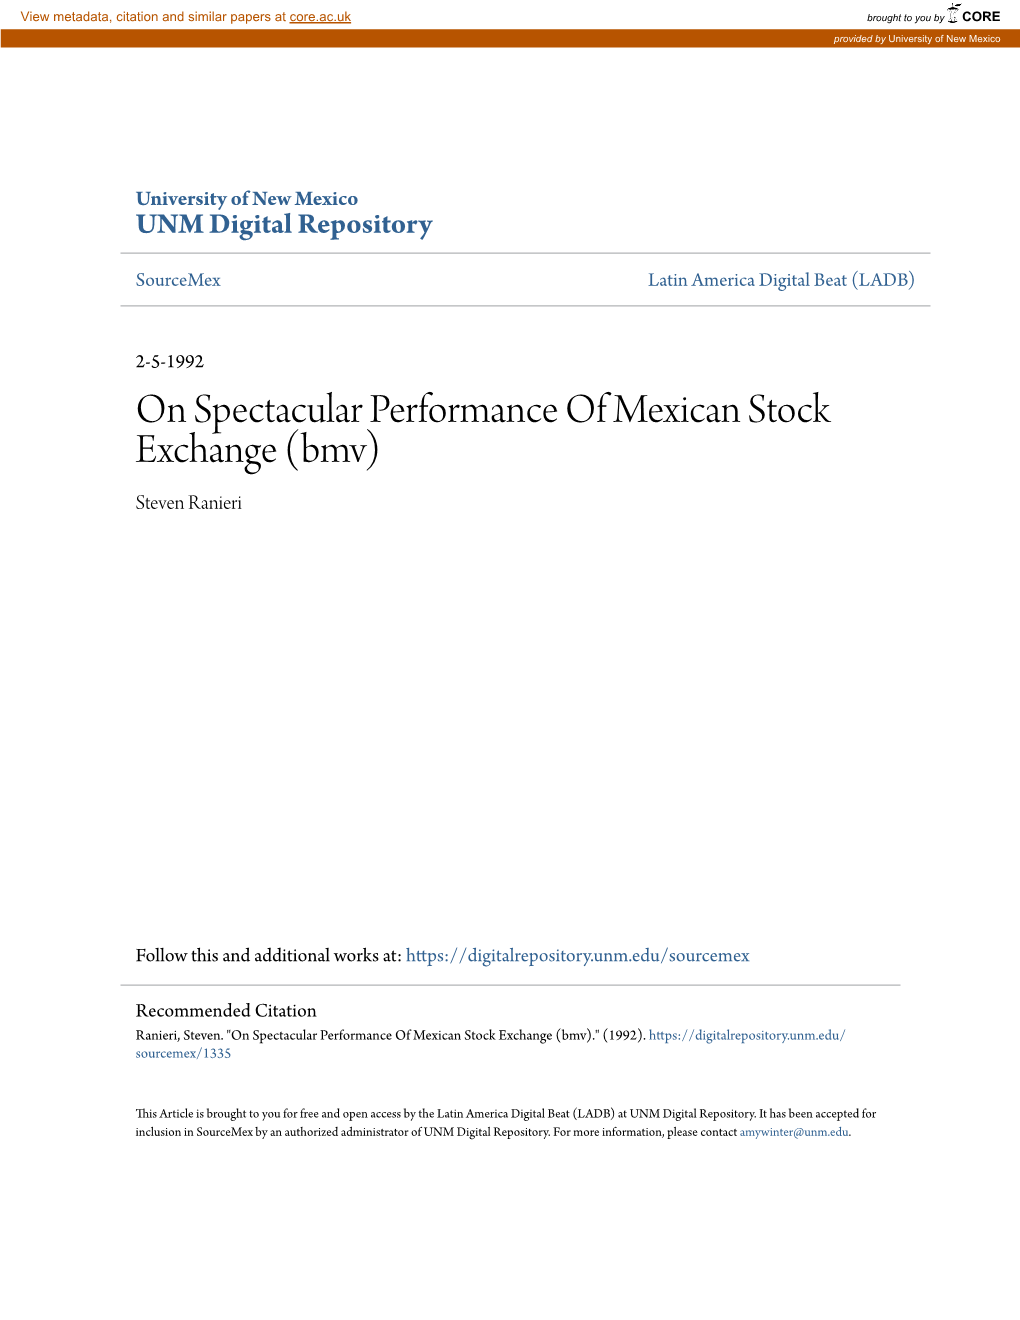 On Spectacular Performance of Mexican Stock Exchange (Bmv) Steven Ranieri